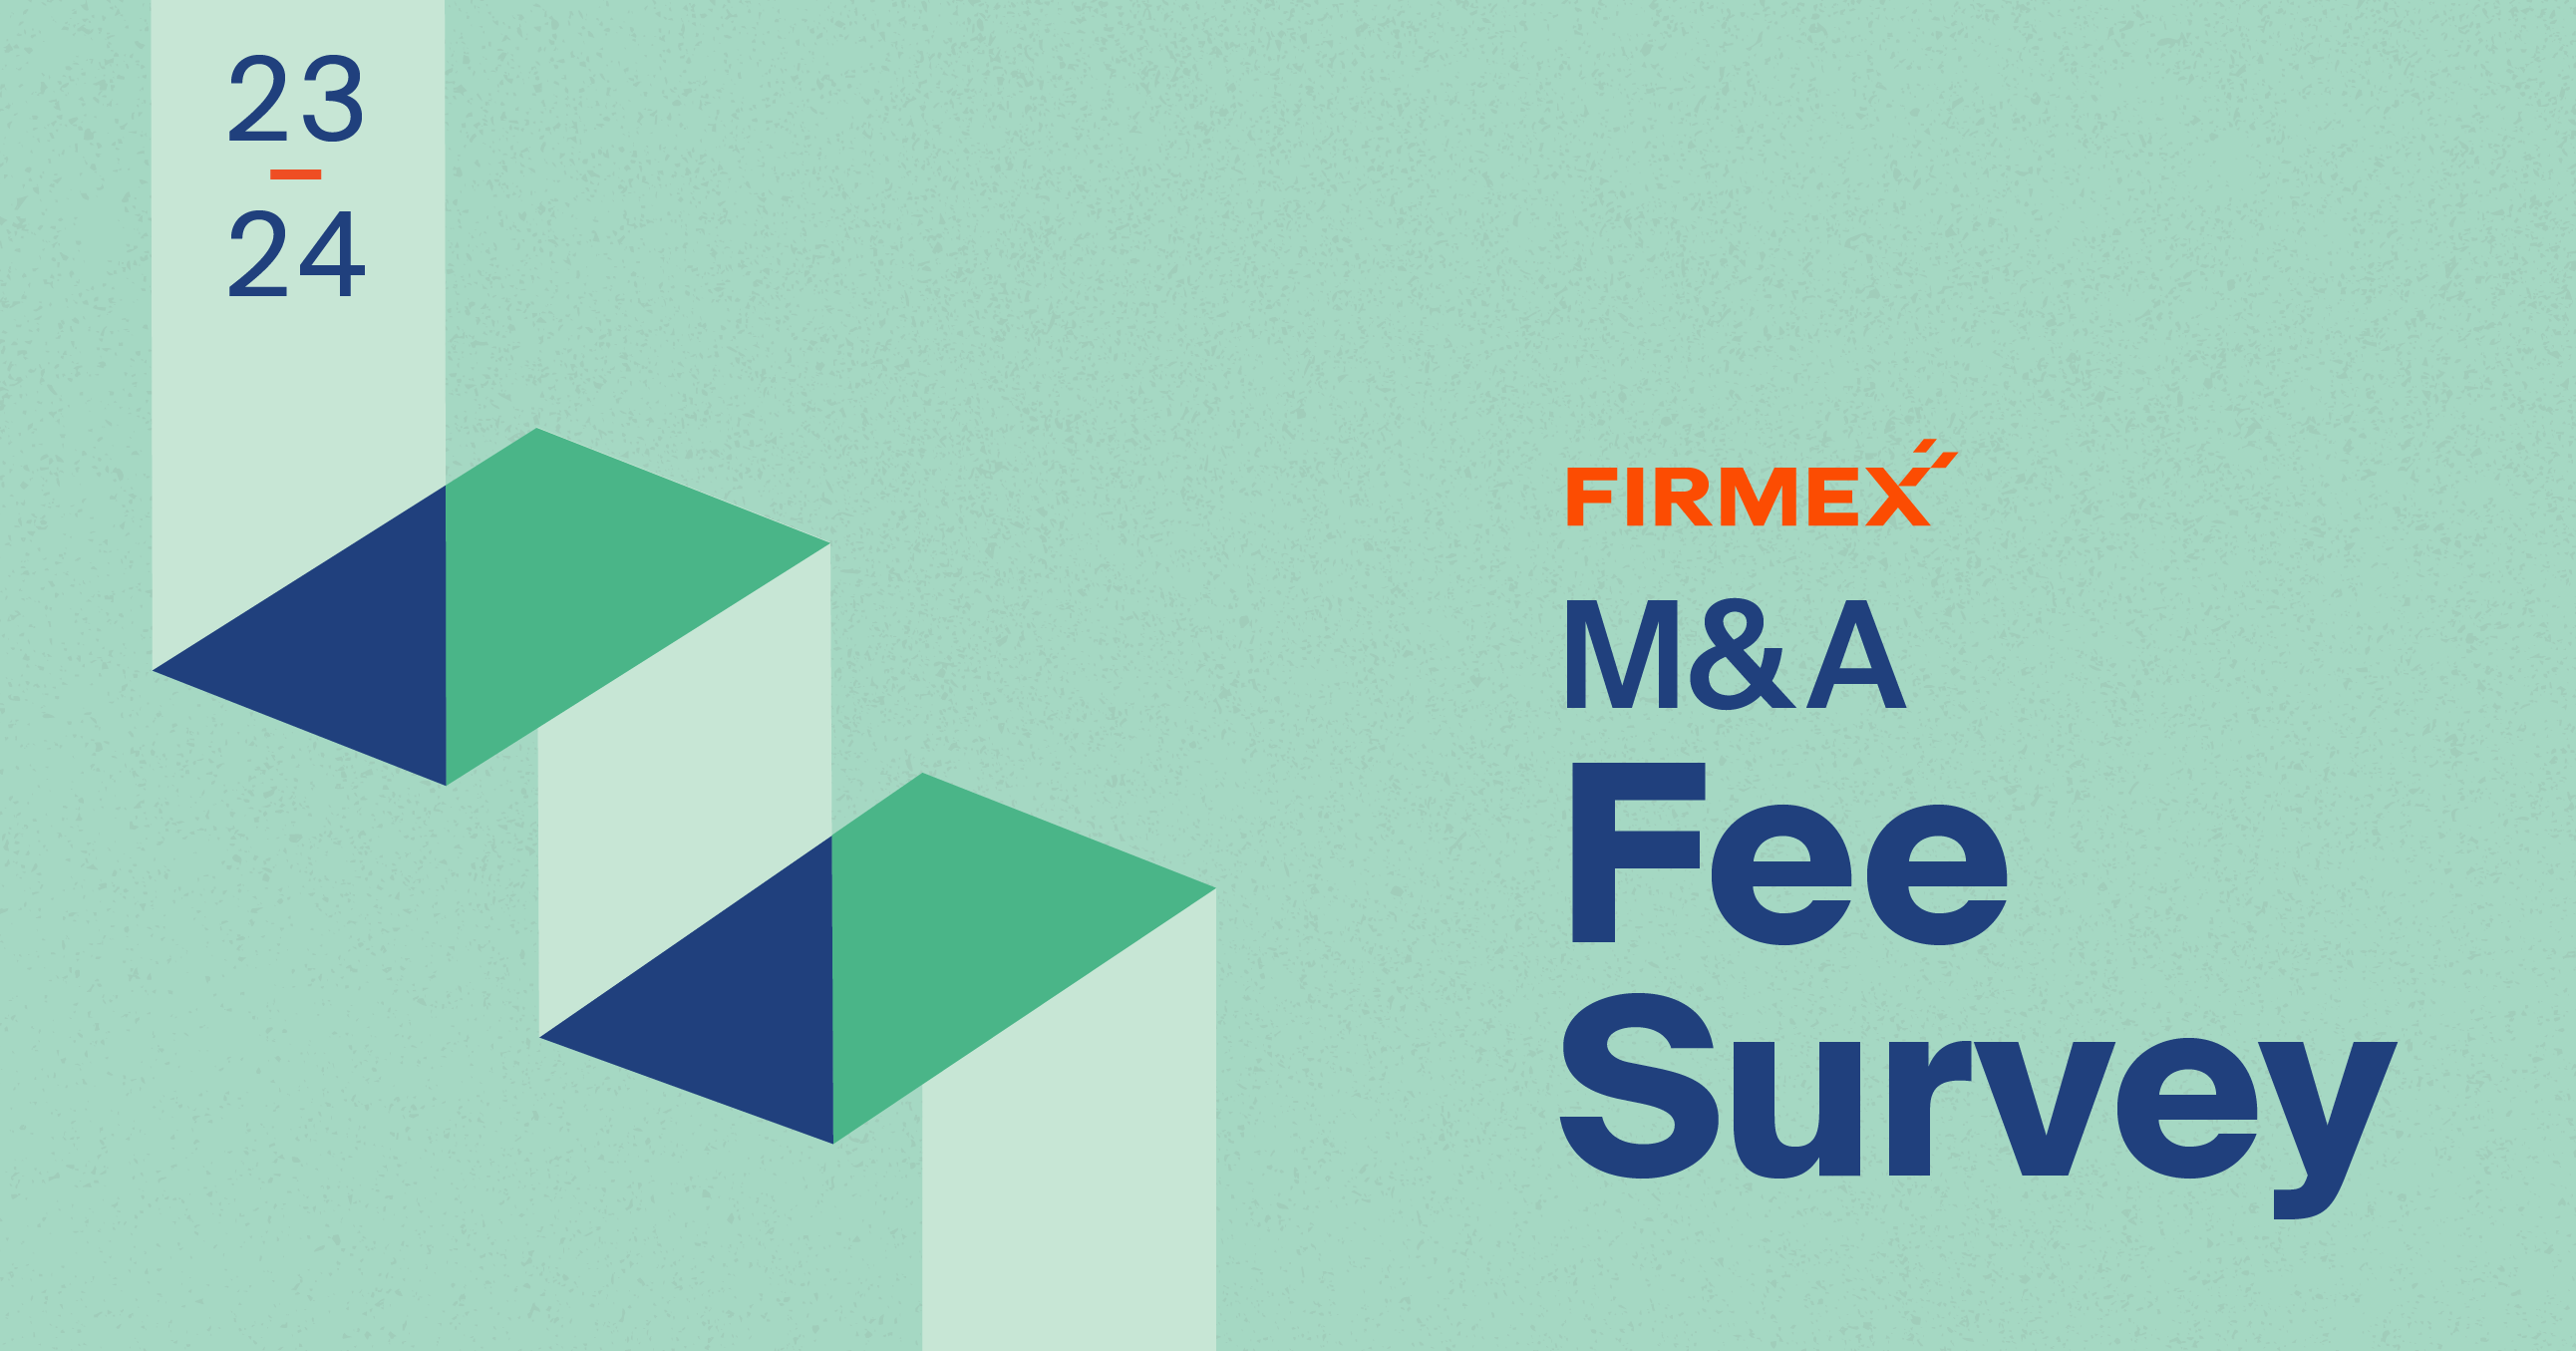 The Firmex M&A Fee Survey